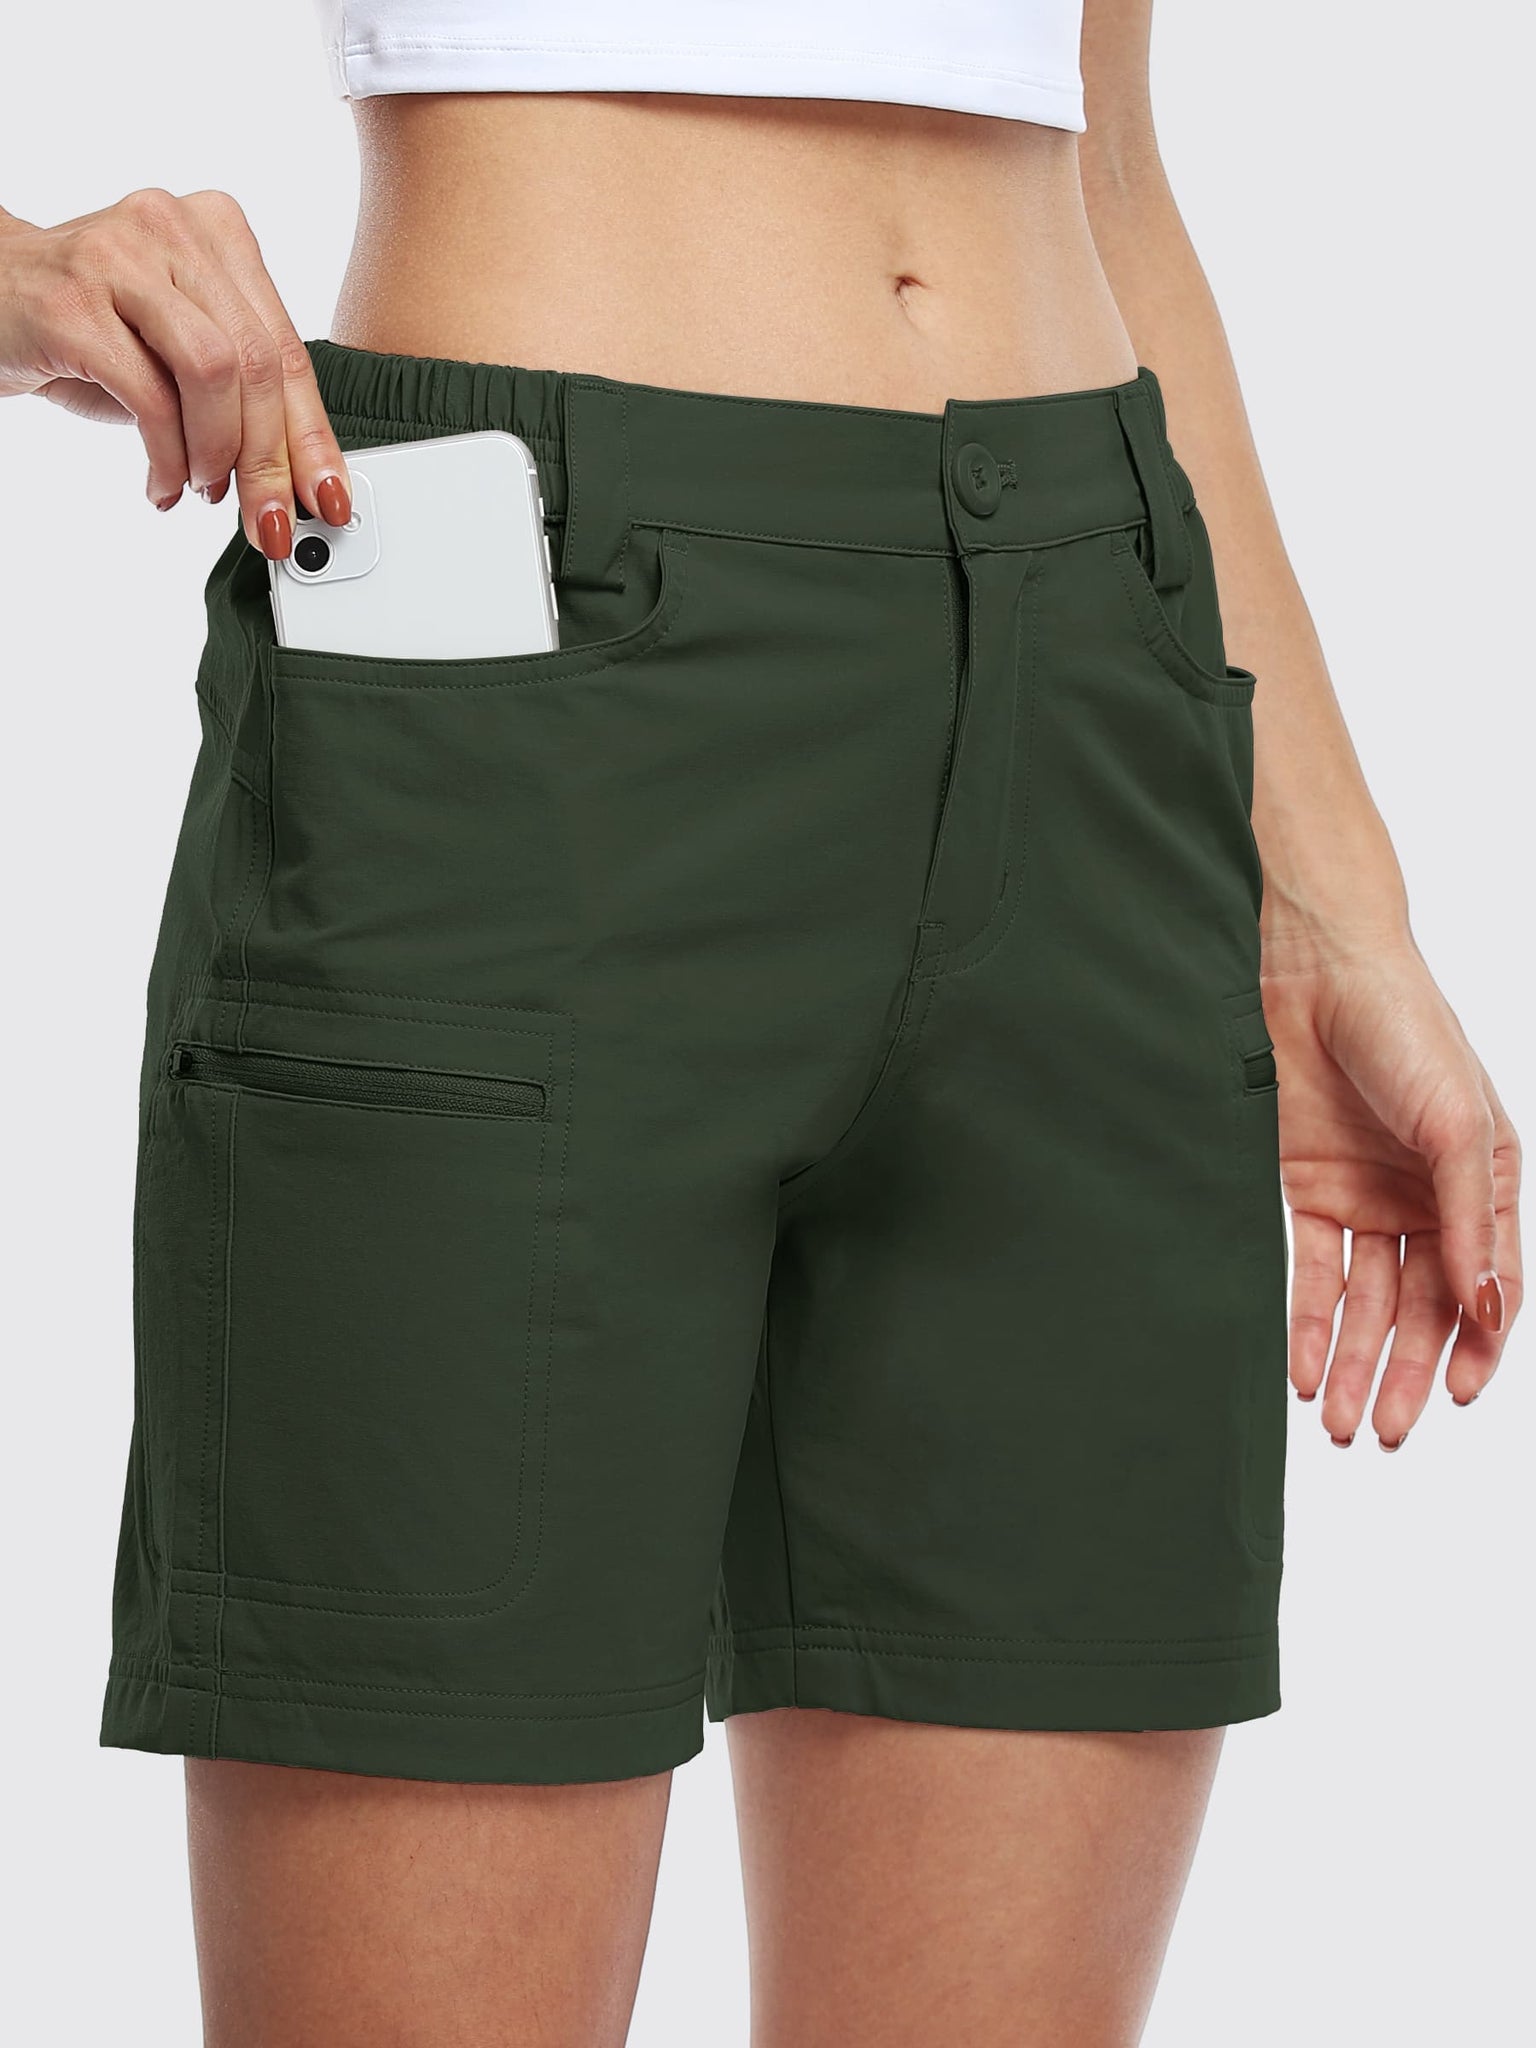 Willit Women's Outdoor Cargo Shorts 6 Inseam_ArmyGreen_model3